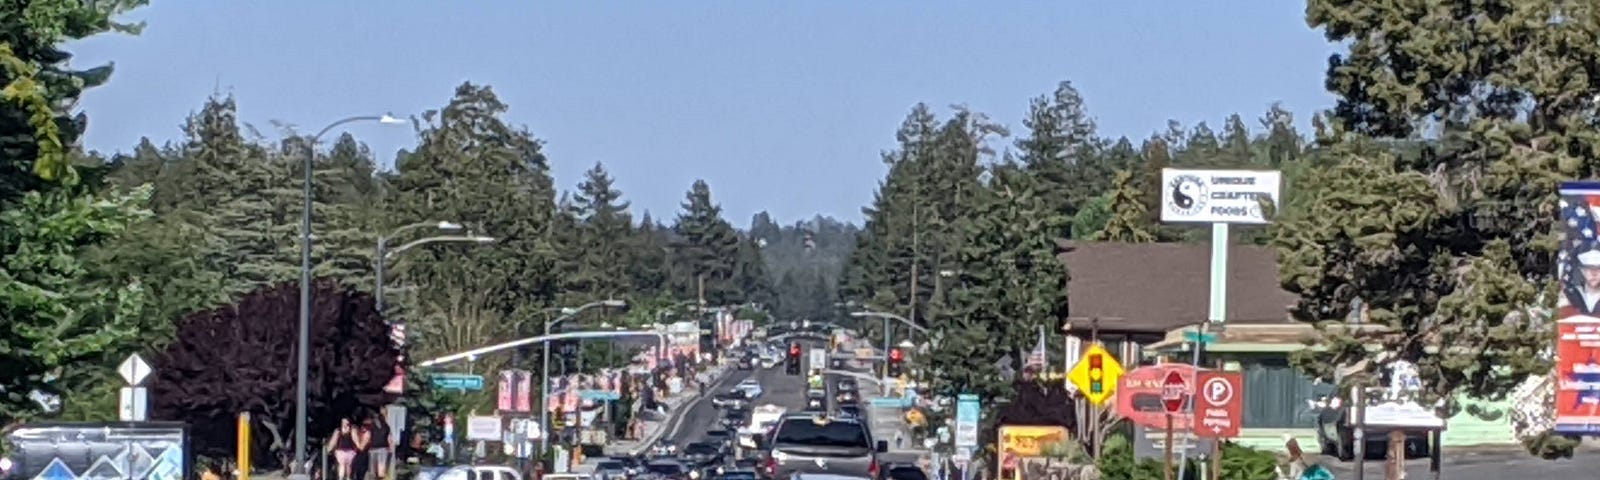 Traffic on the main highway through Big Bear, CA